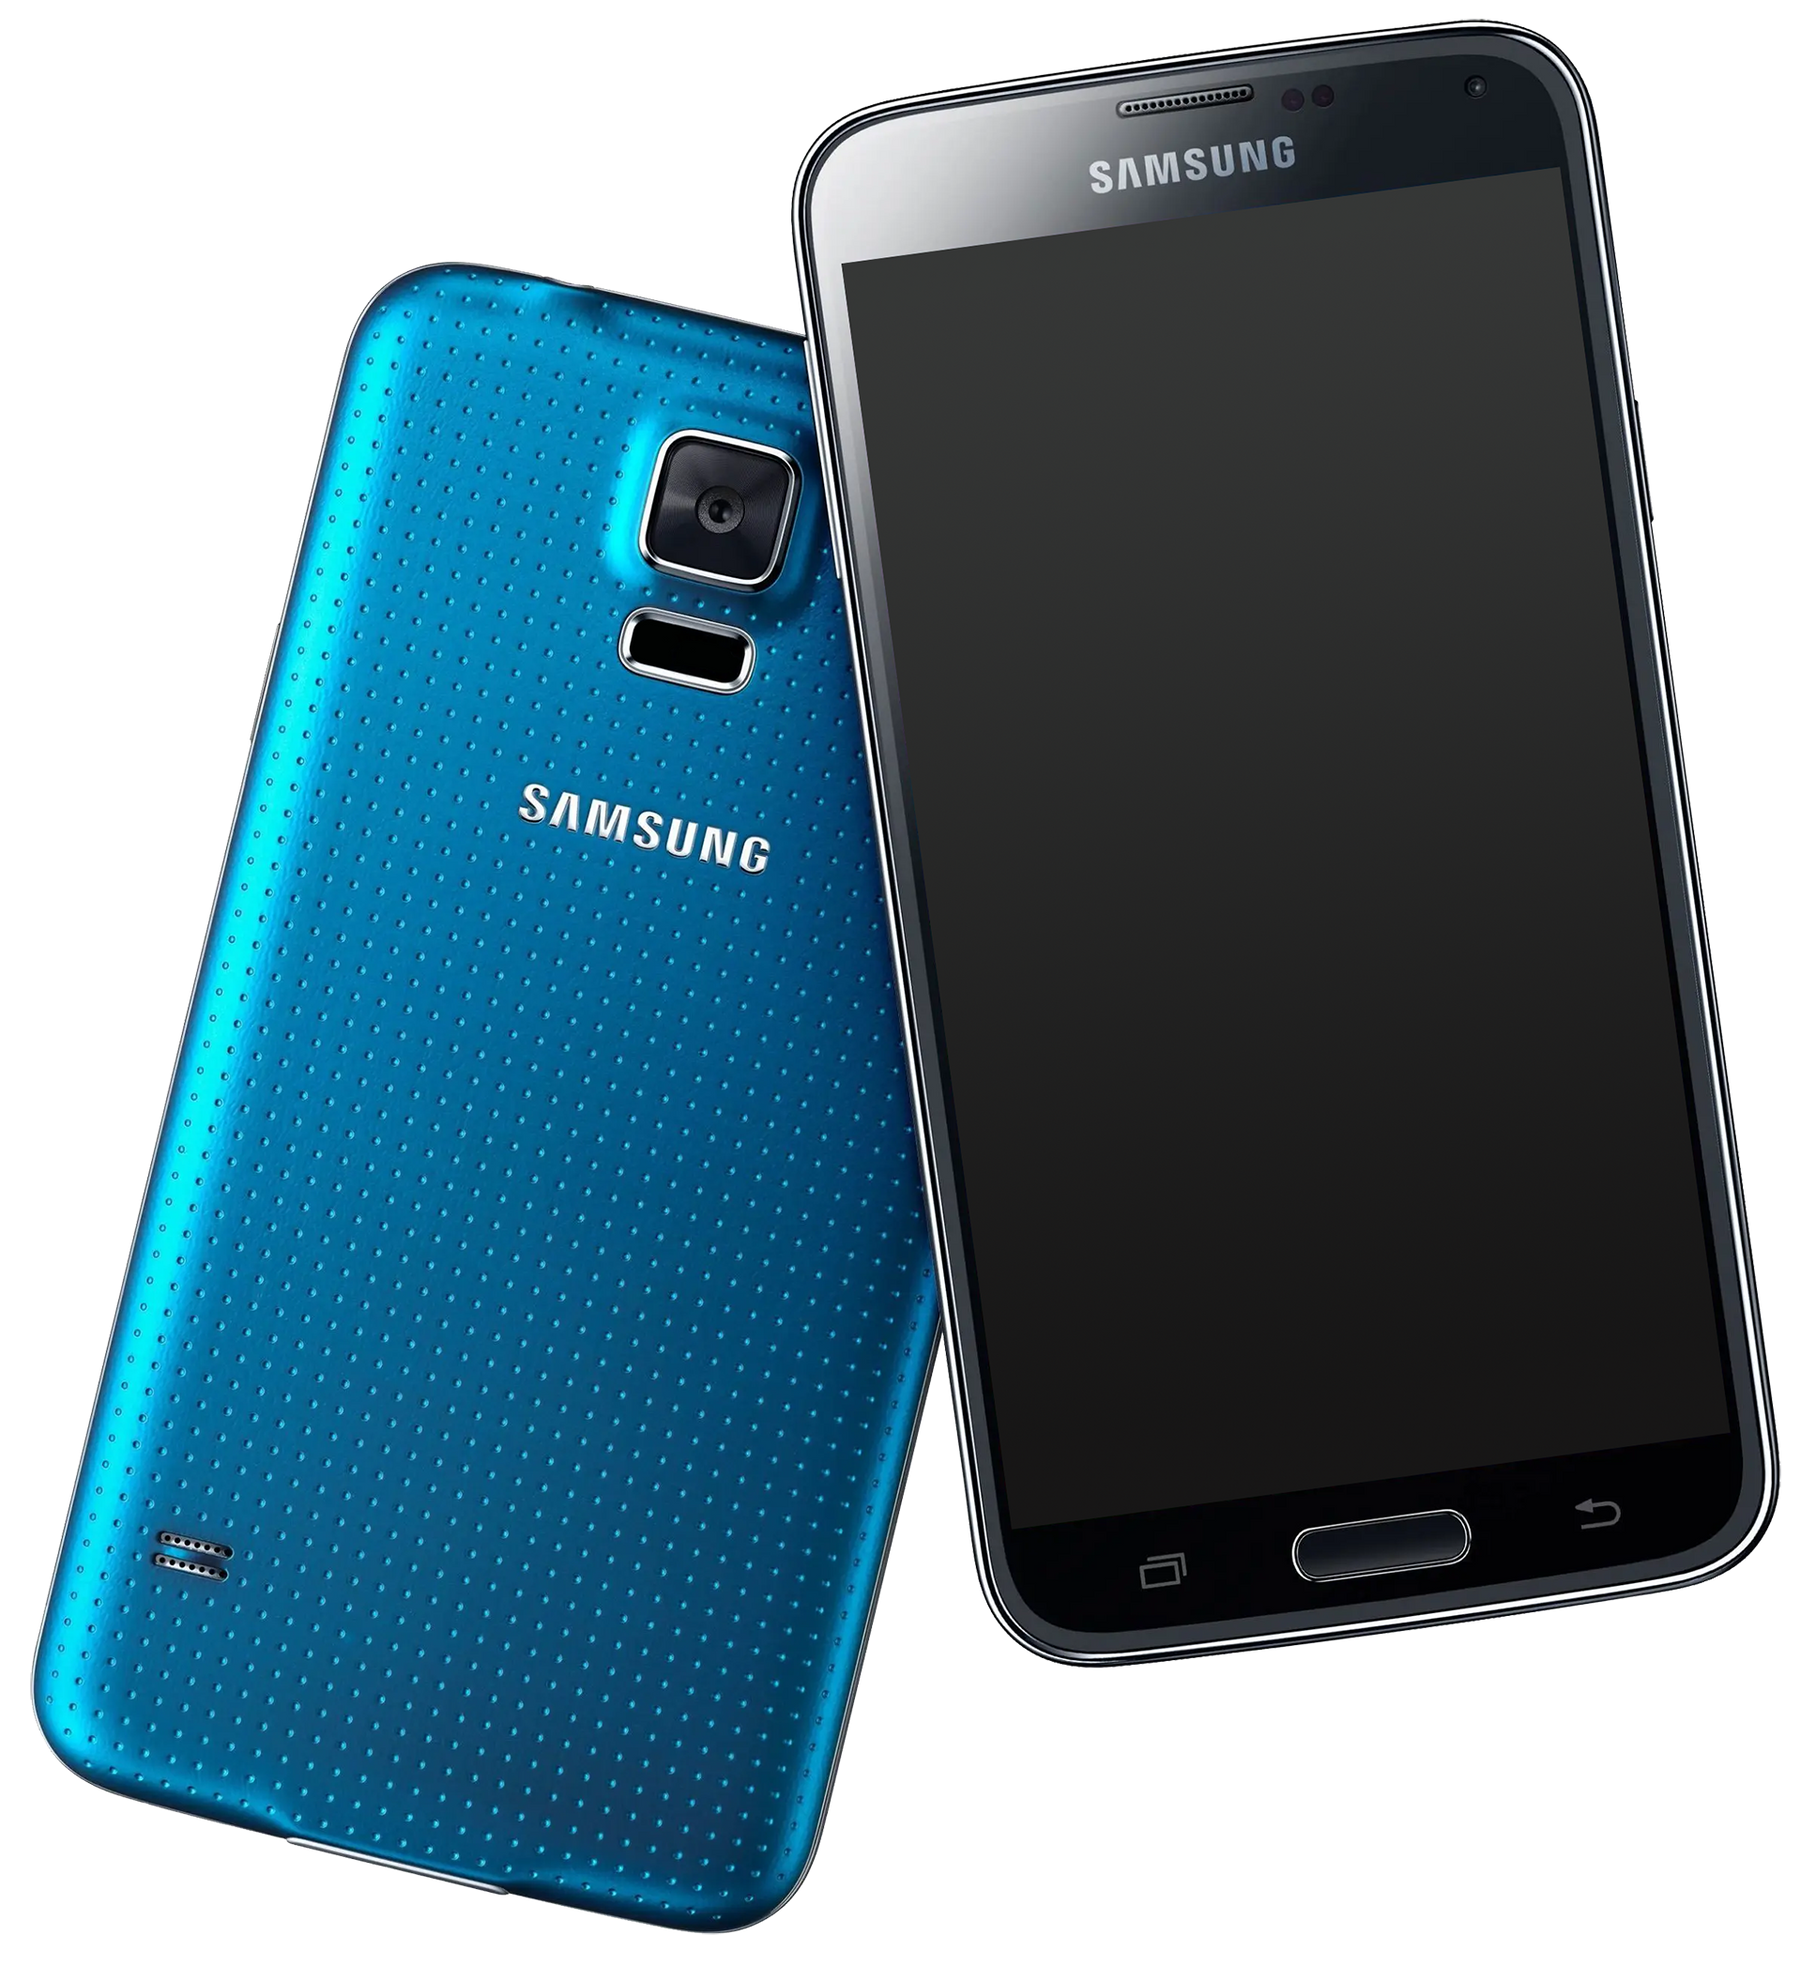 Samsung Galaxy s5 Neo blau - Onhe Vertrag